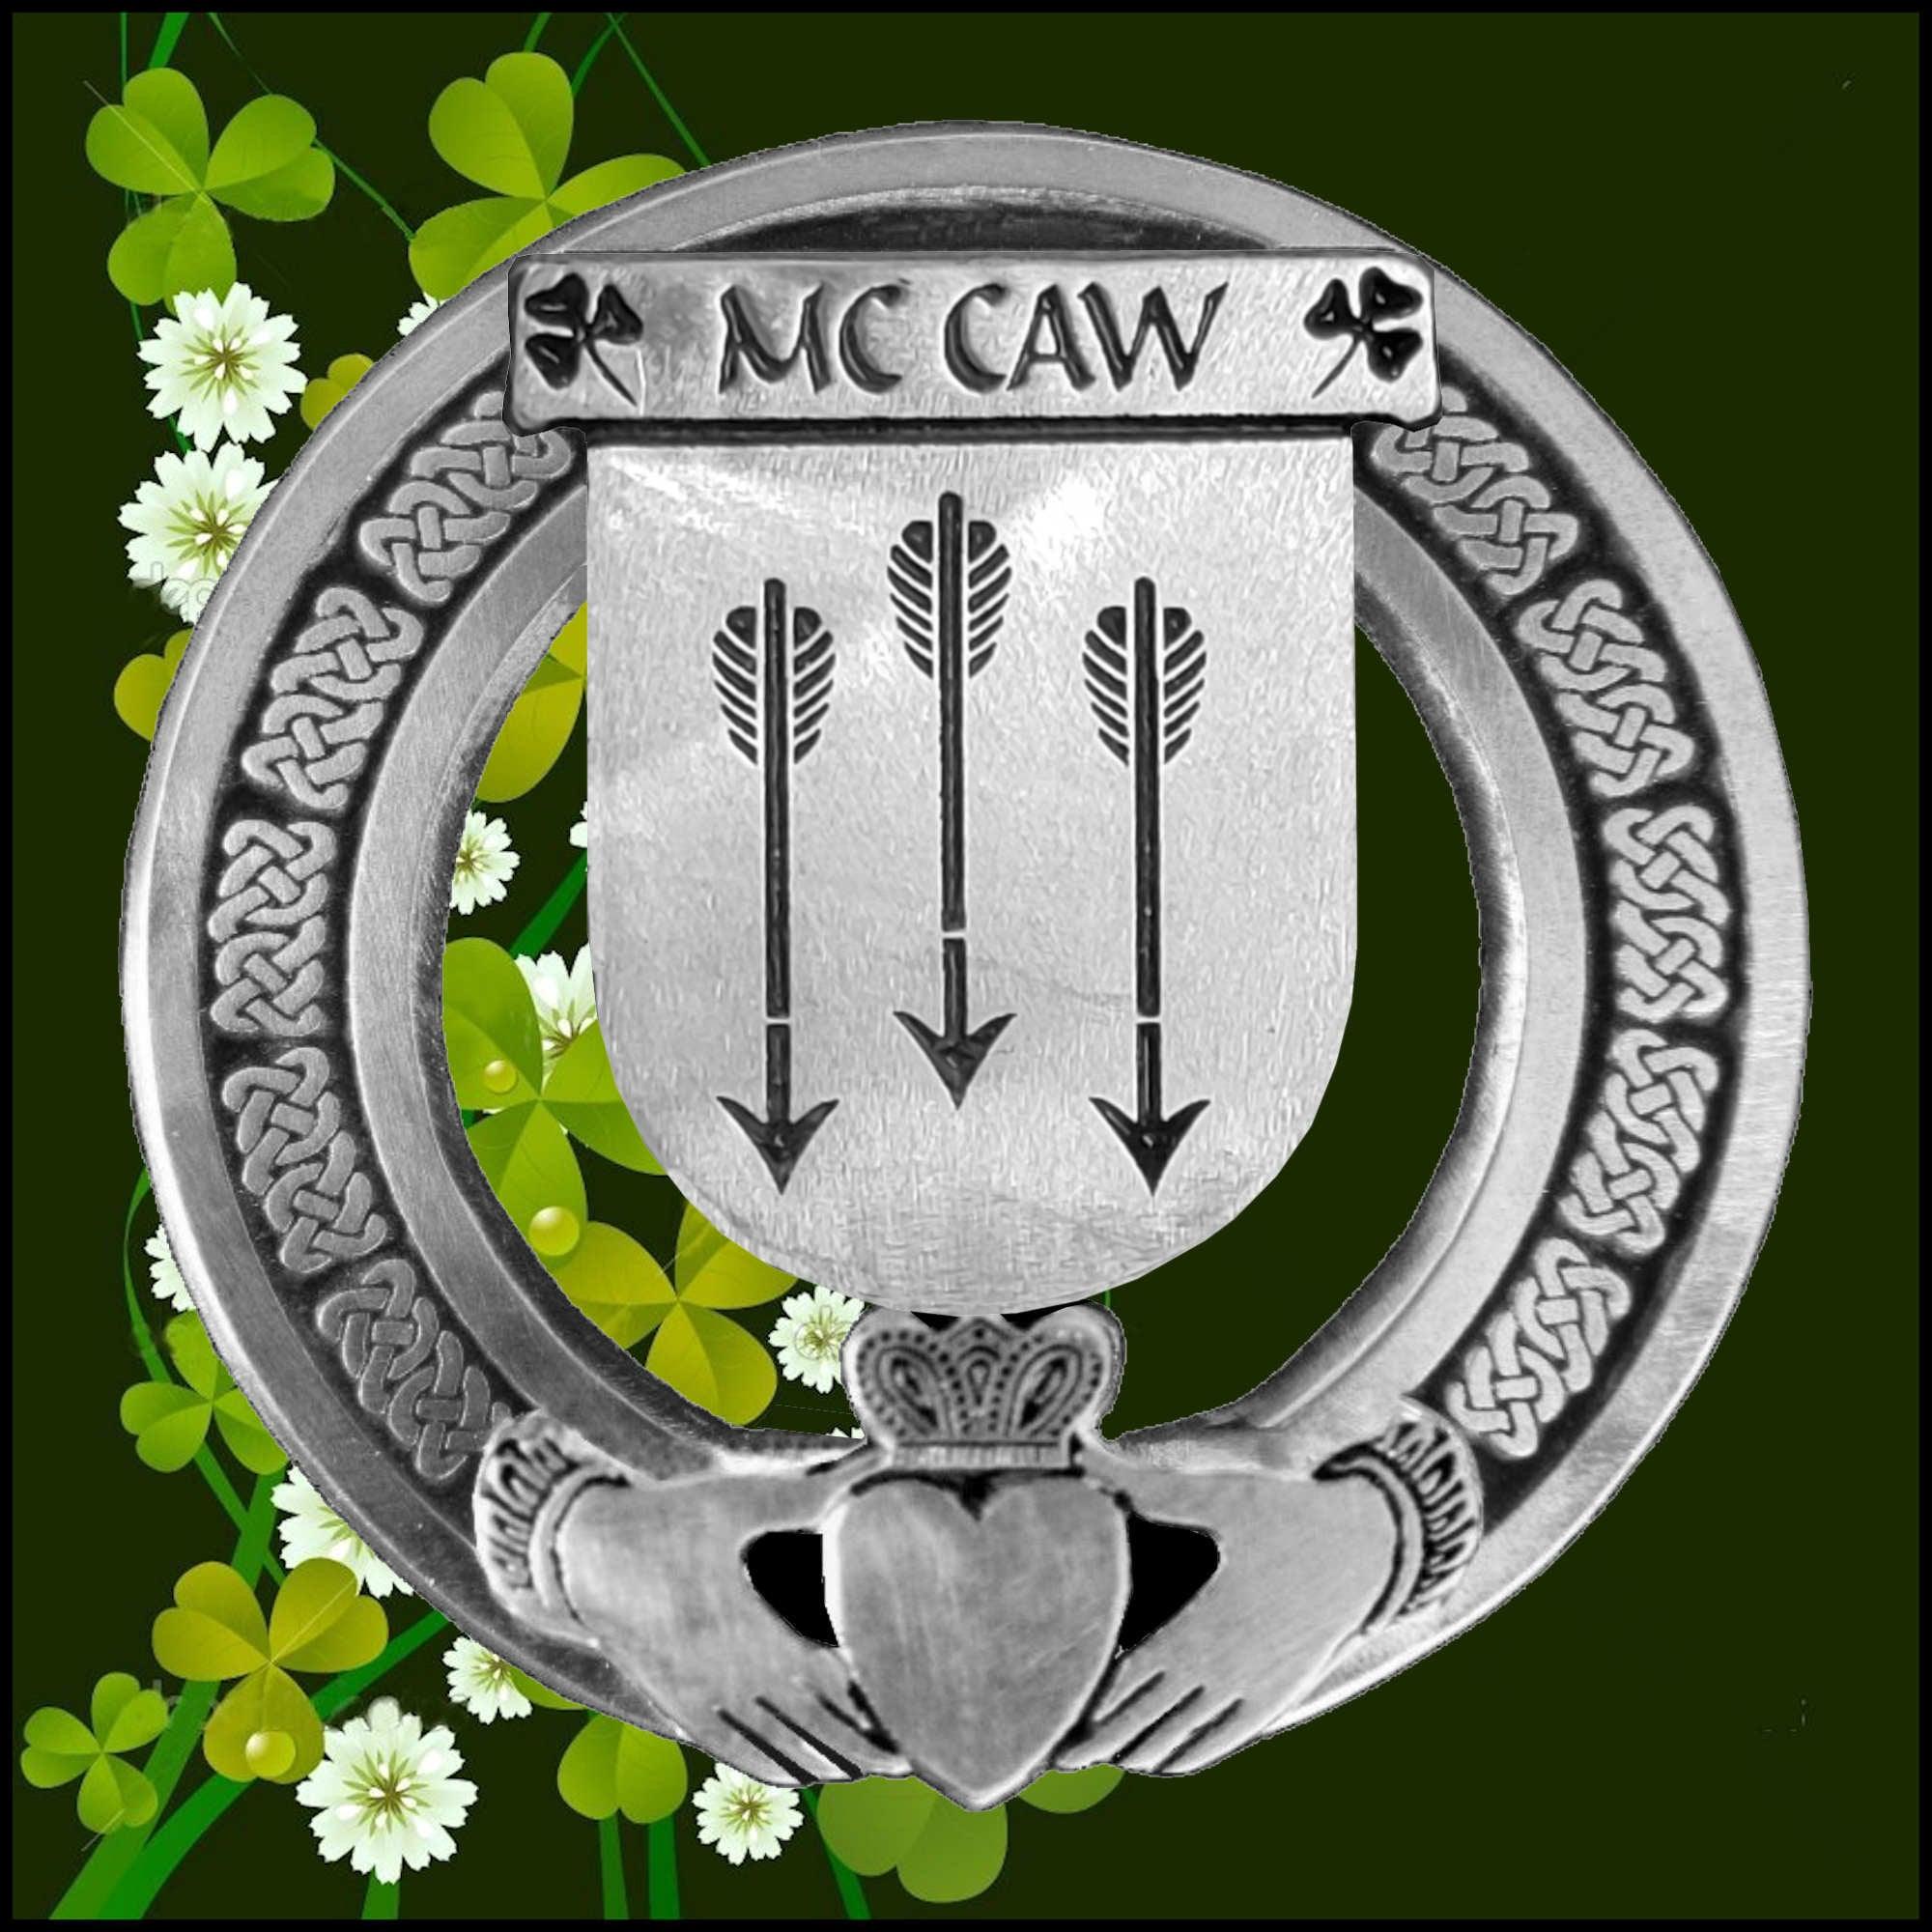 McCaw Irish Claddagh Coat of Arms Badge